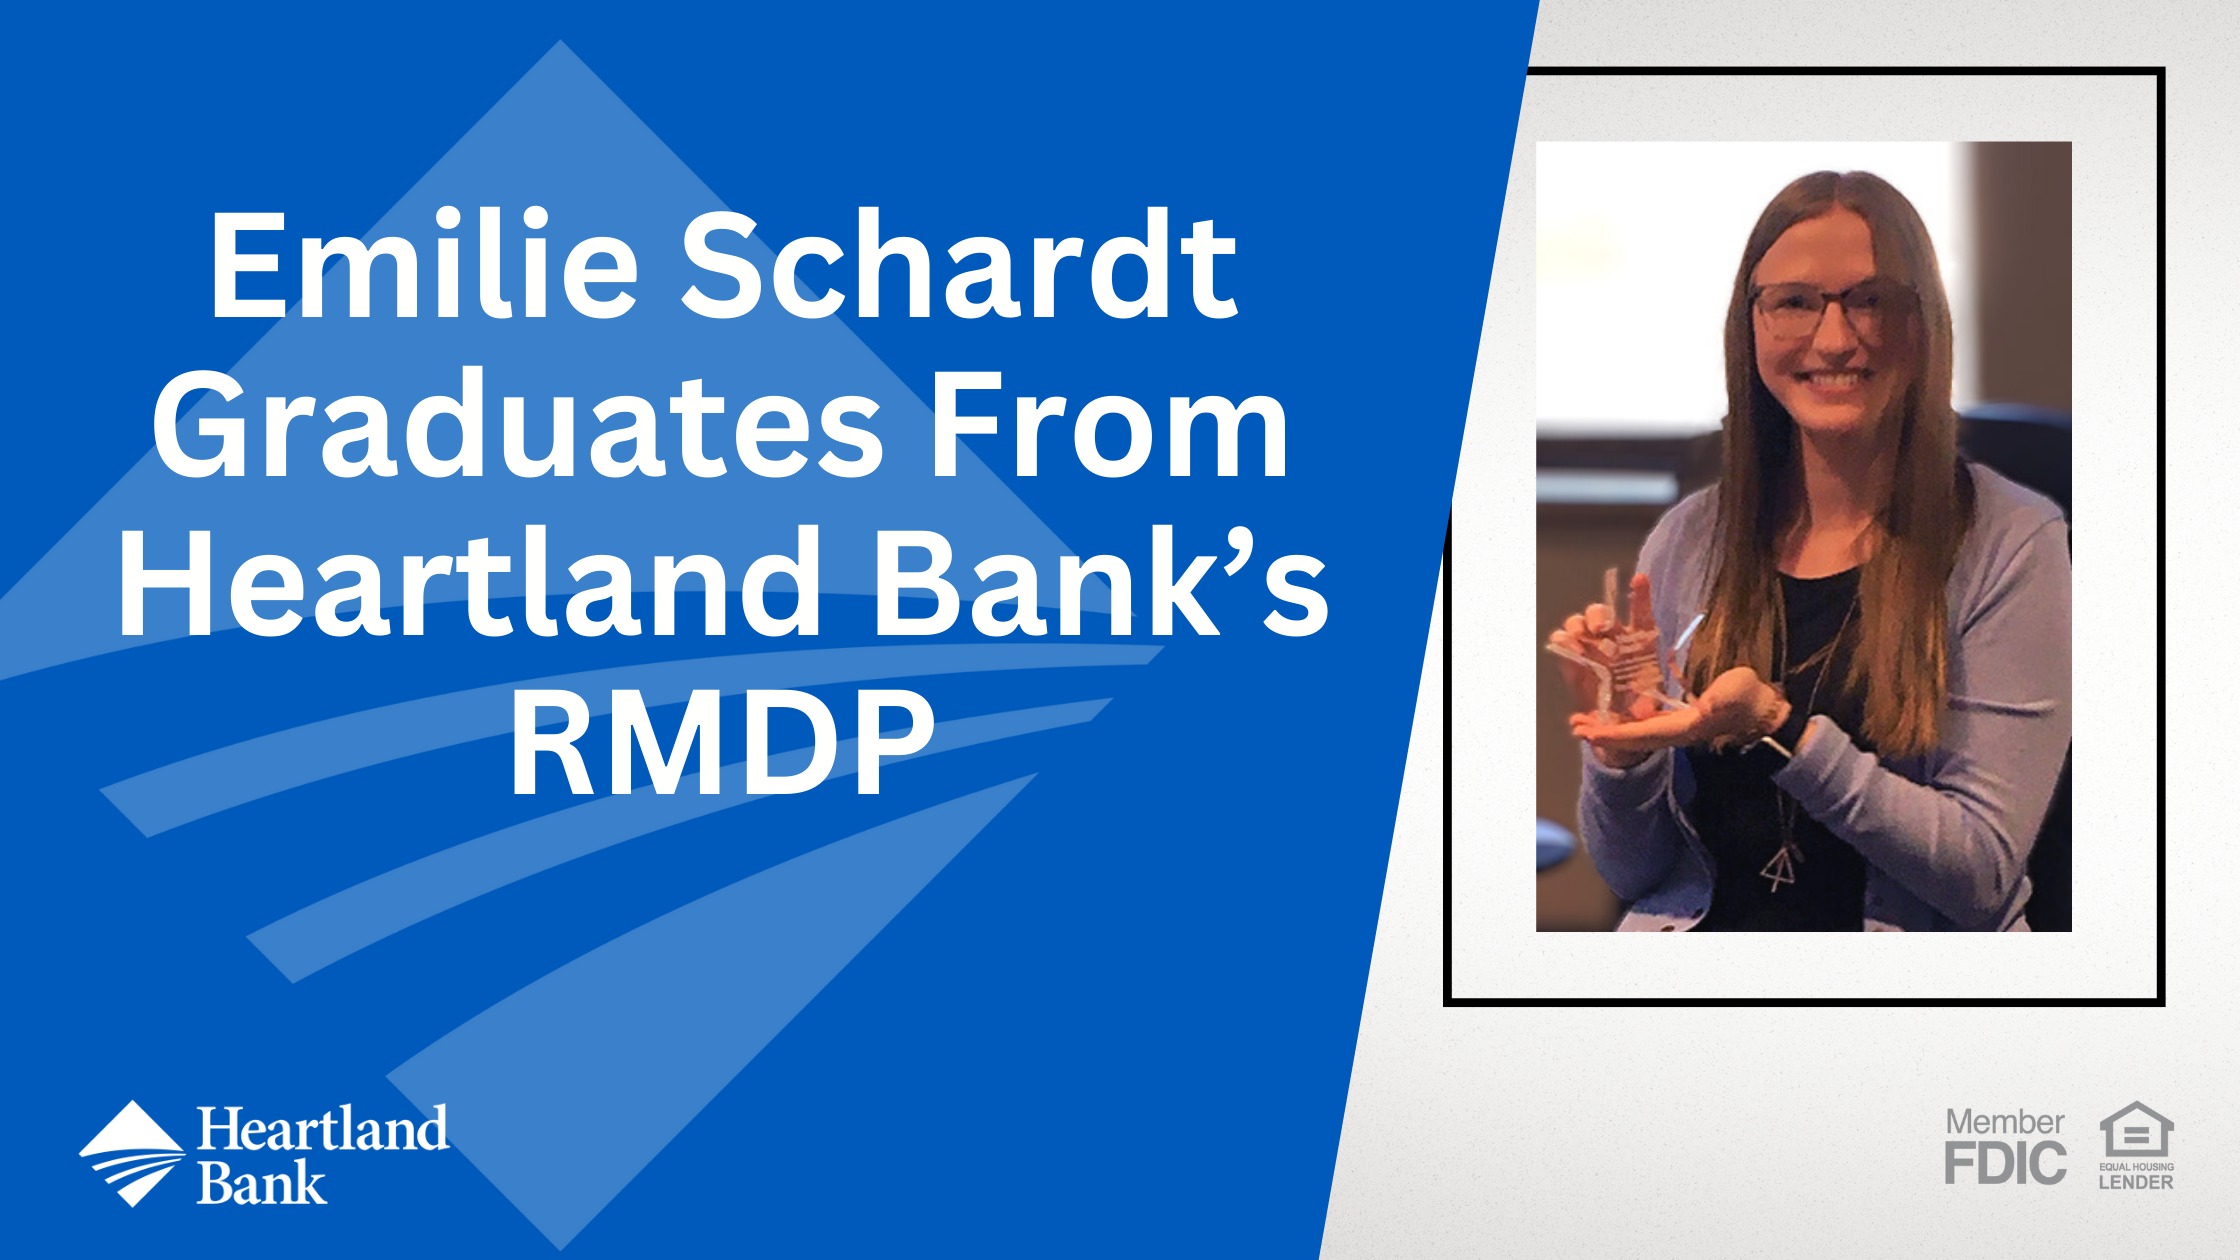 Emilie Schardt graduates from Heartland Bank's RMDP